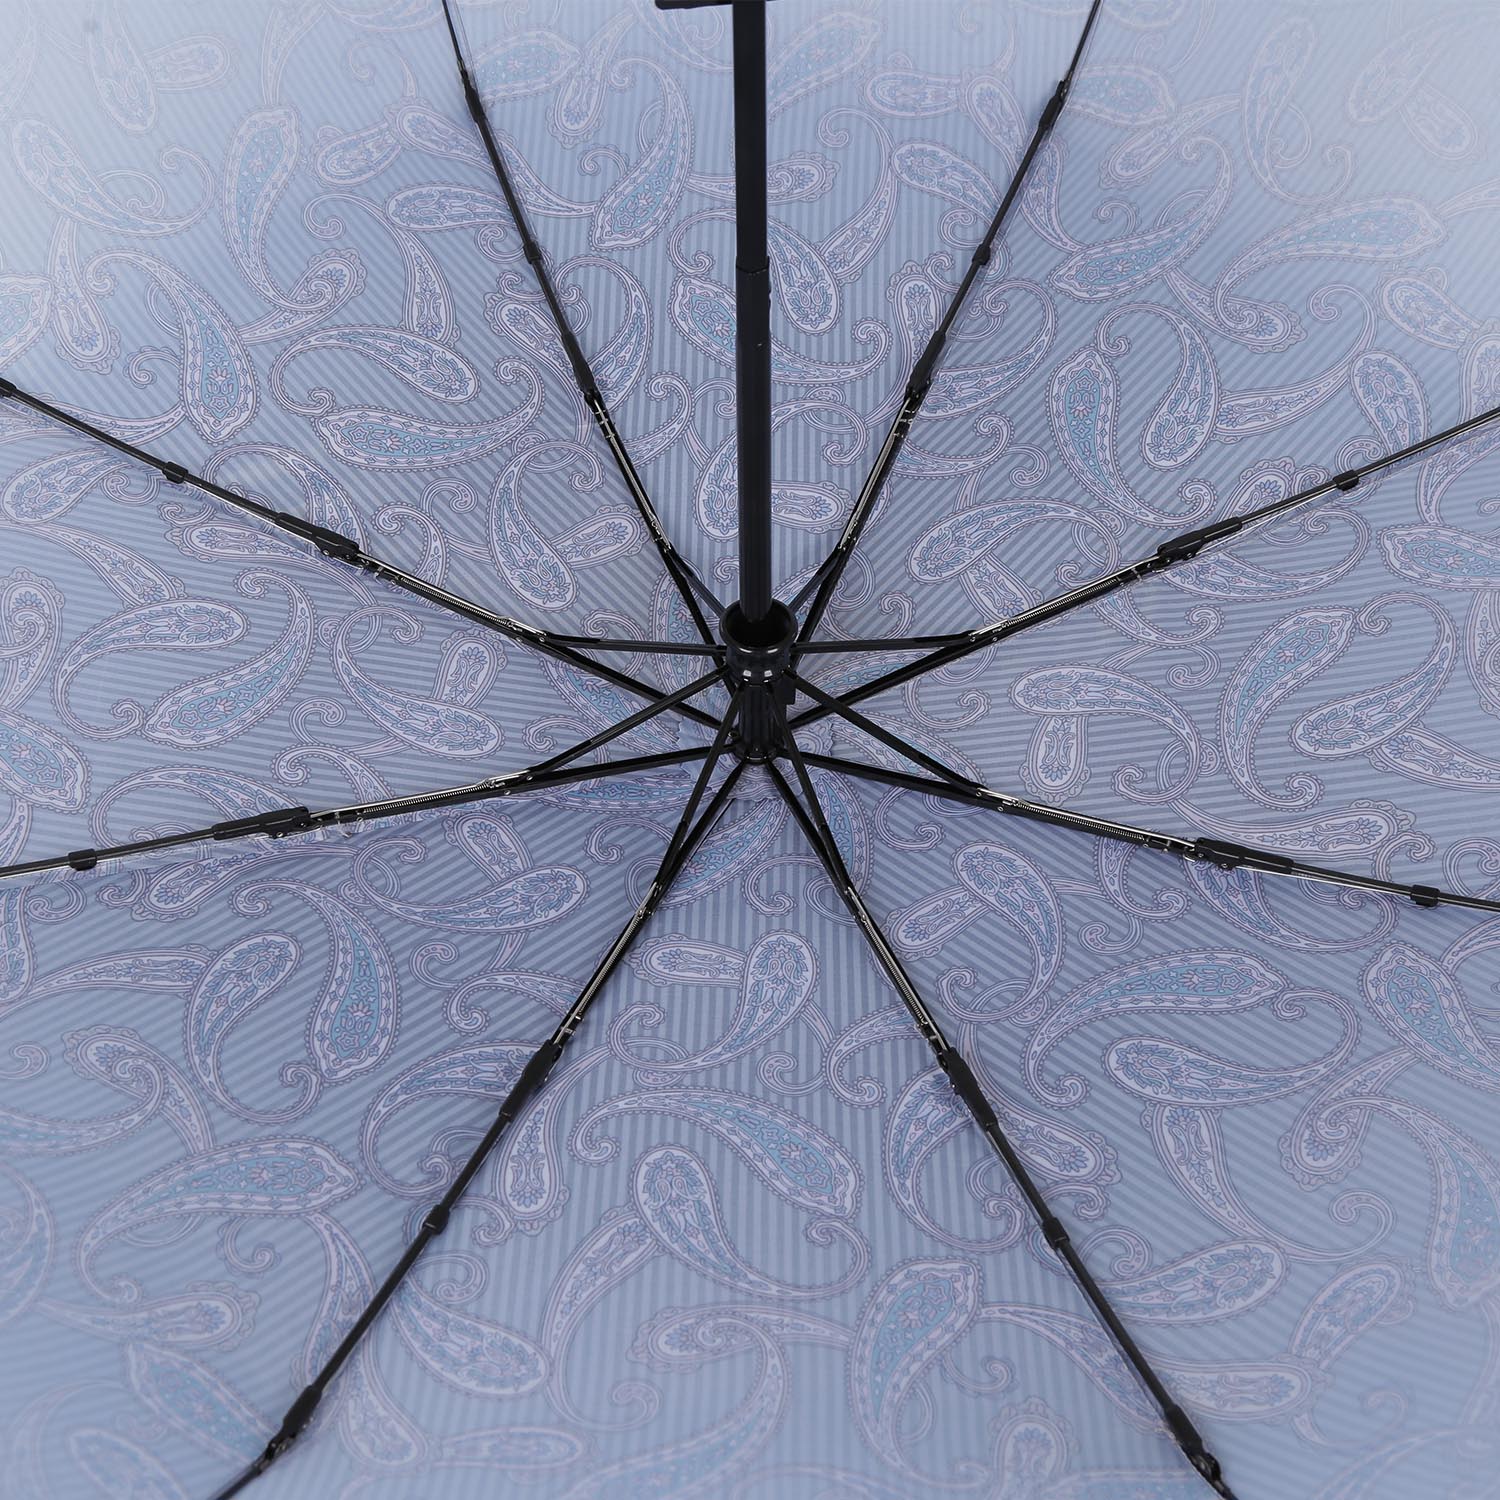 Зонт складной женский автоматический FABRETTI S-20107 голубой